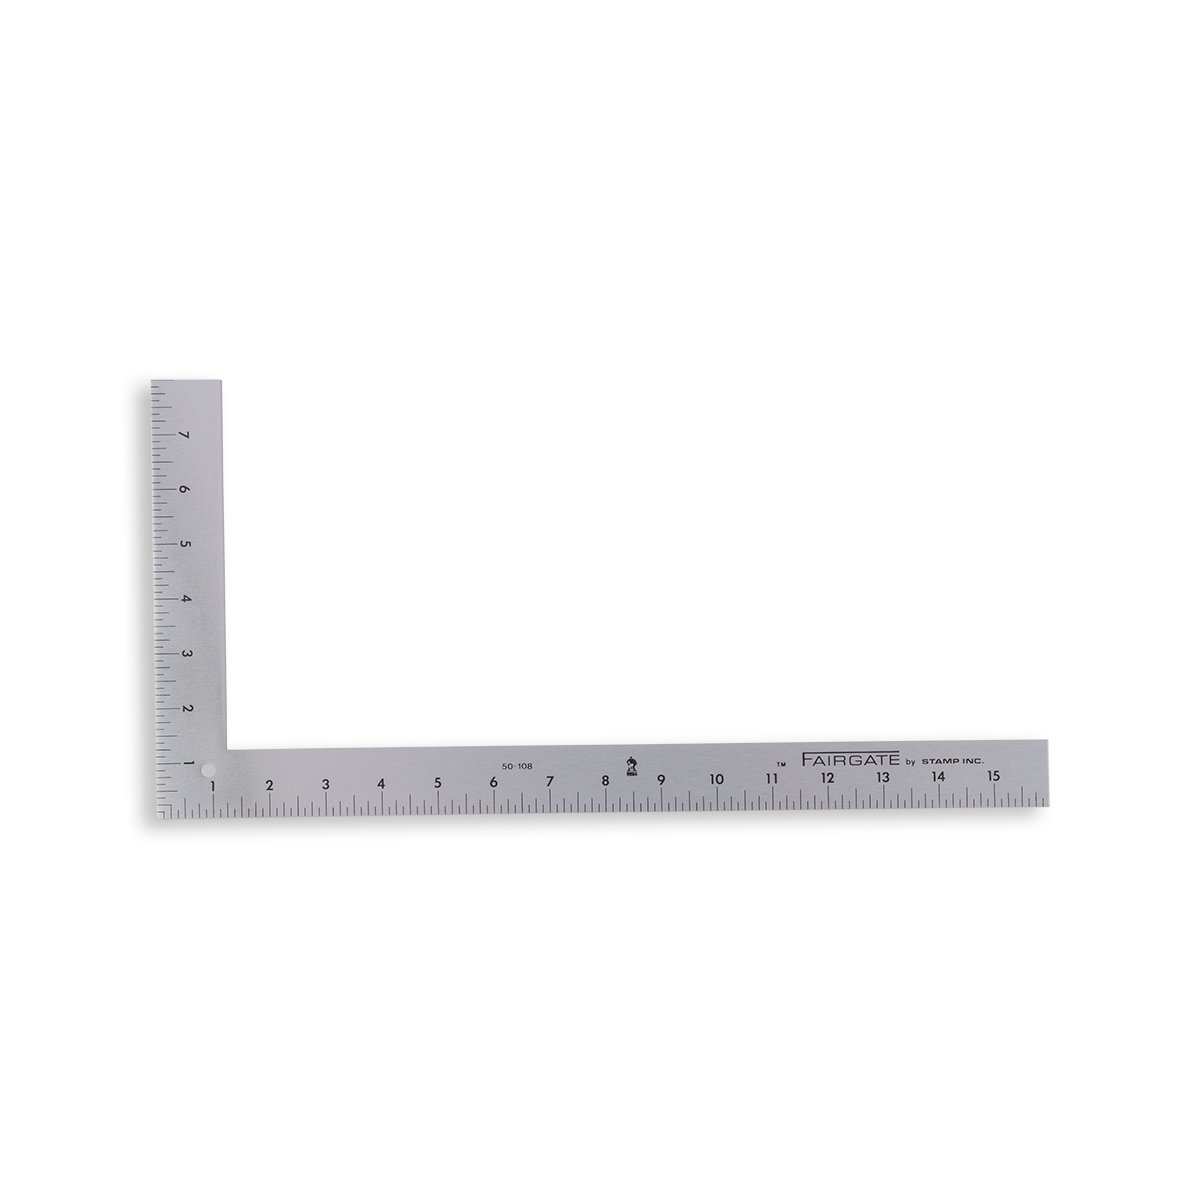 LoveinDIY 1Pcs Metal L-Square Angle Ruler Handworking Measuring Sewing Tool 